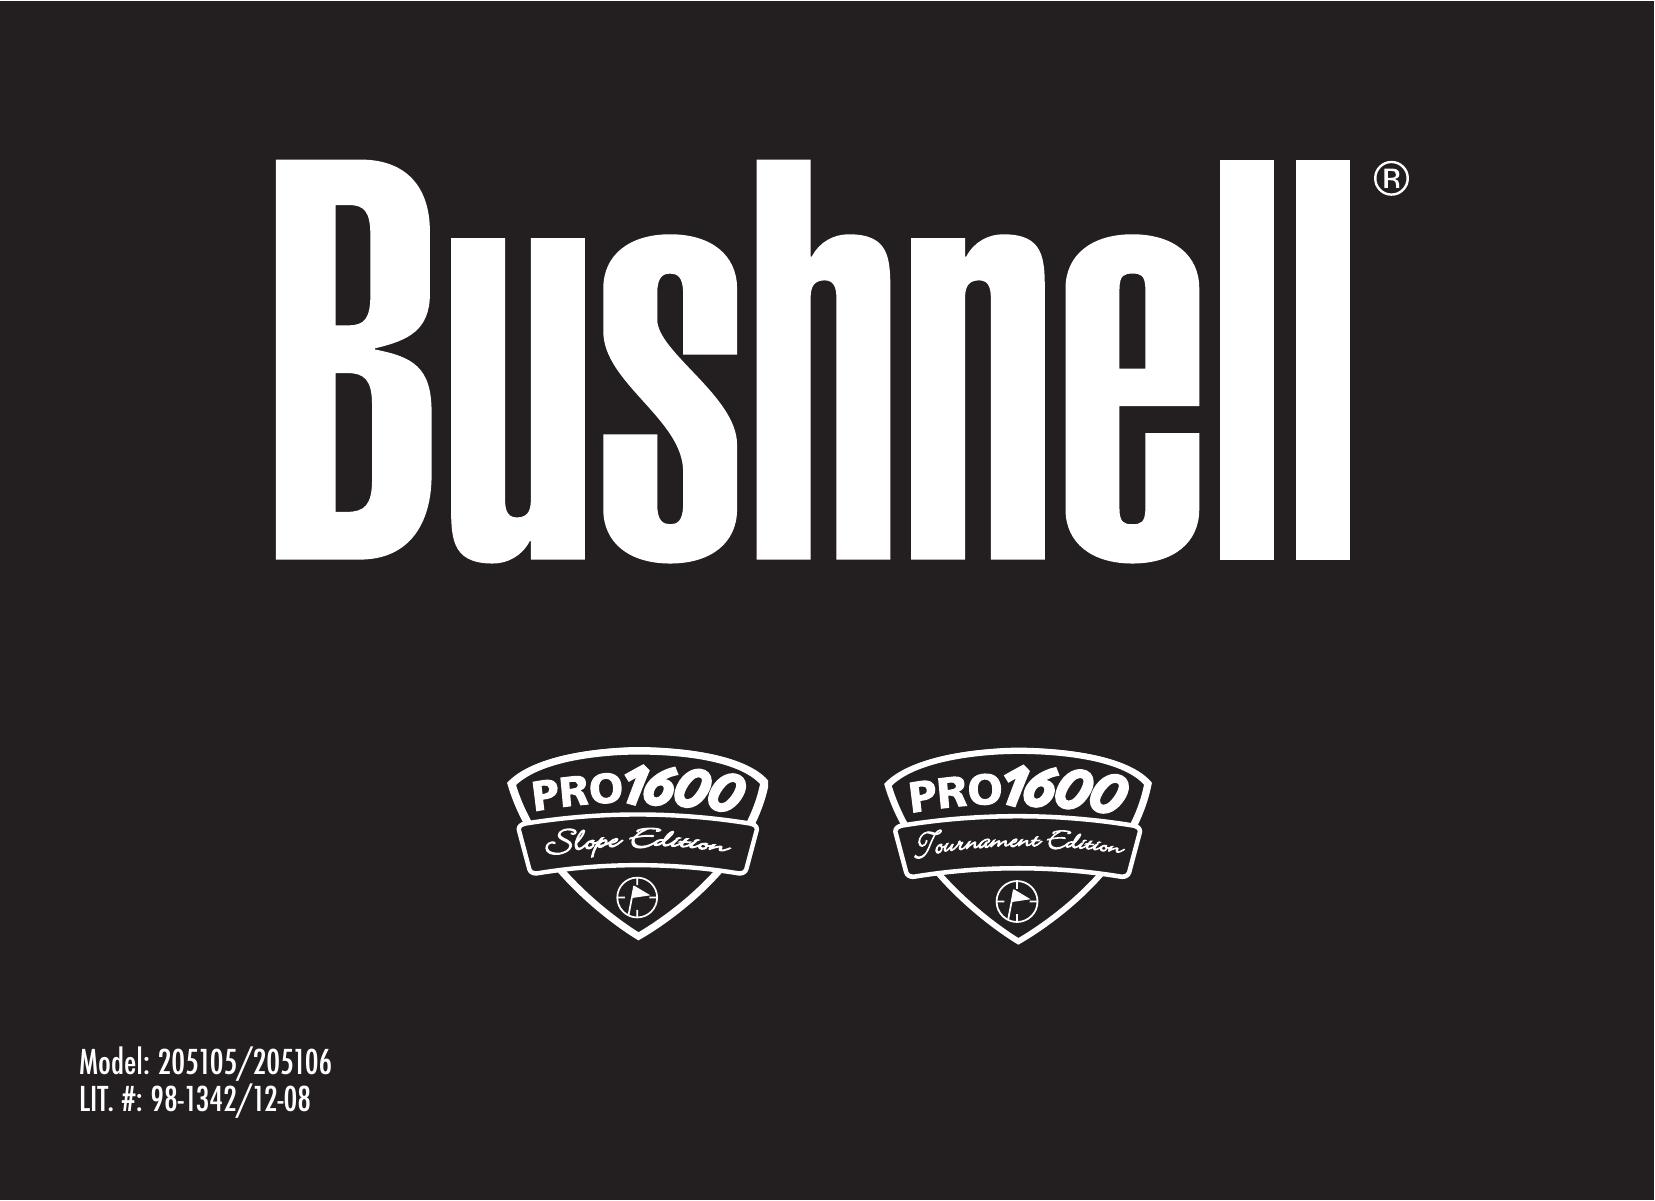 Bushnell 20 5106 Camera Accessories User Manual